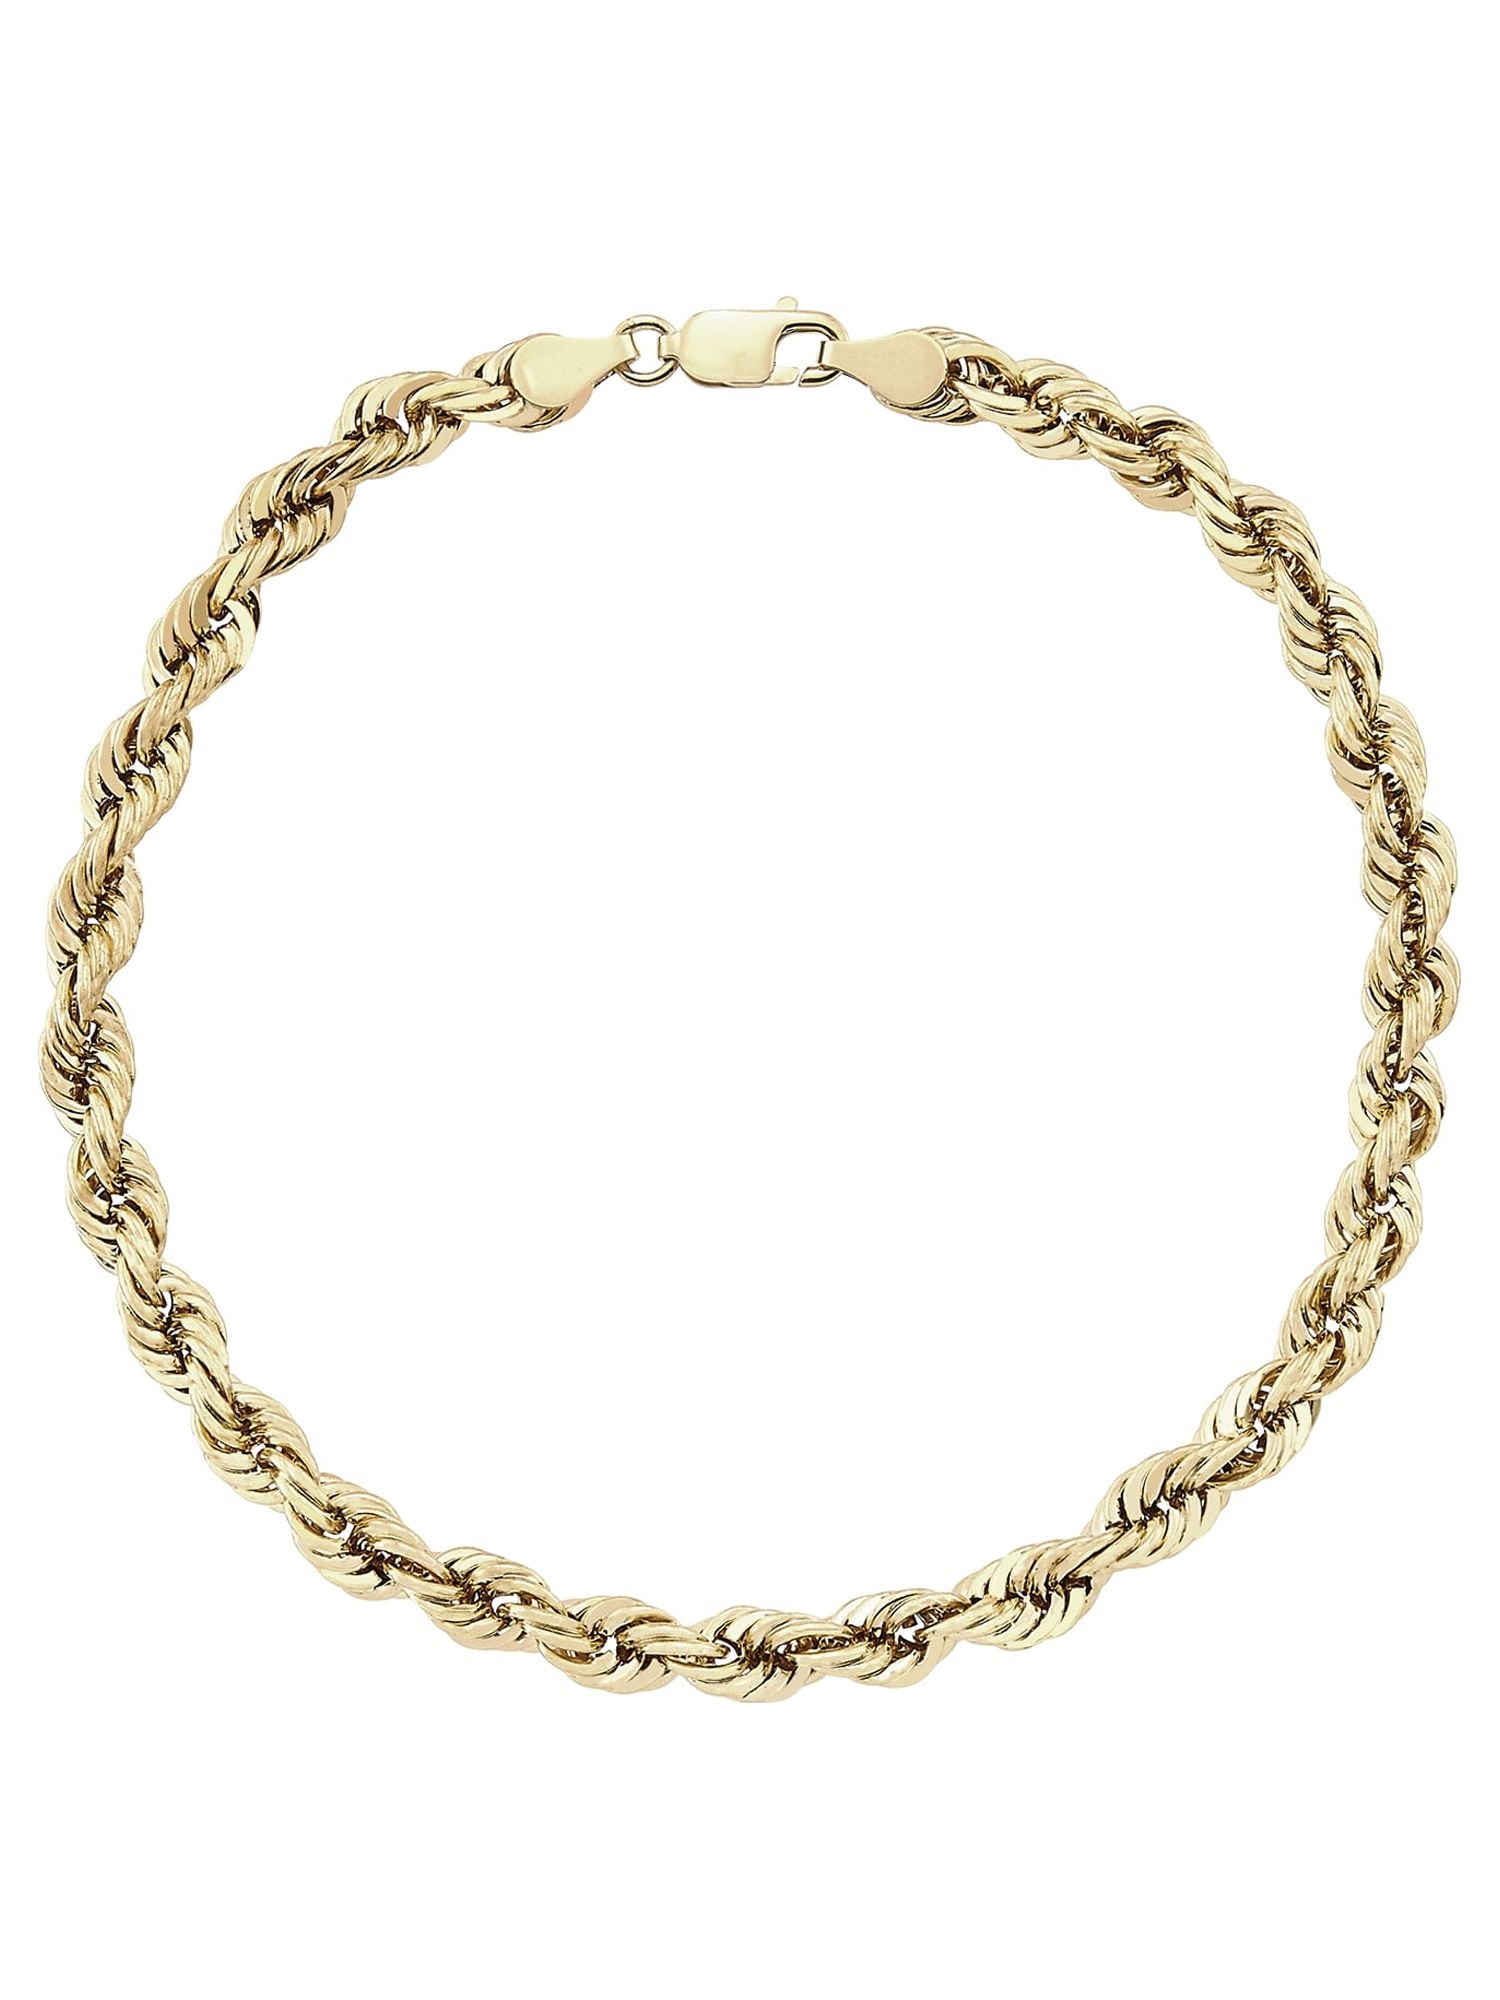 Nuragold 10k Yellow Gold 7mm Rope Chain Diamond Cut Bracelet, Mens Womens  Jewelry 7